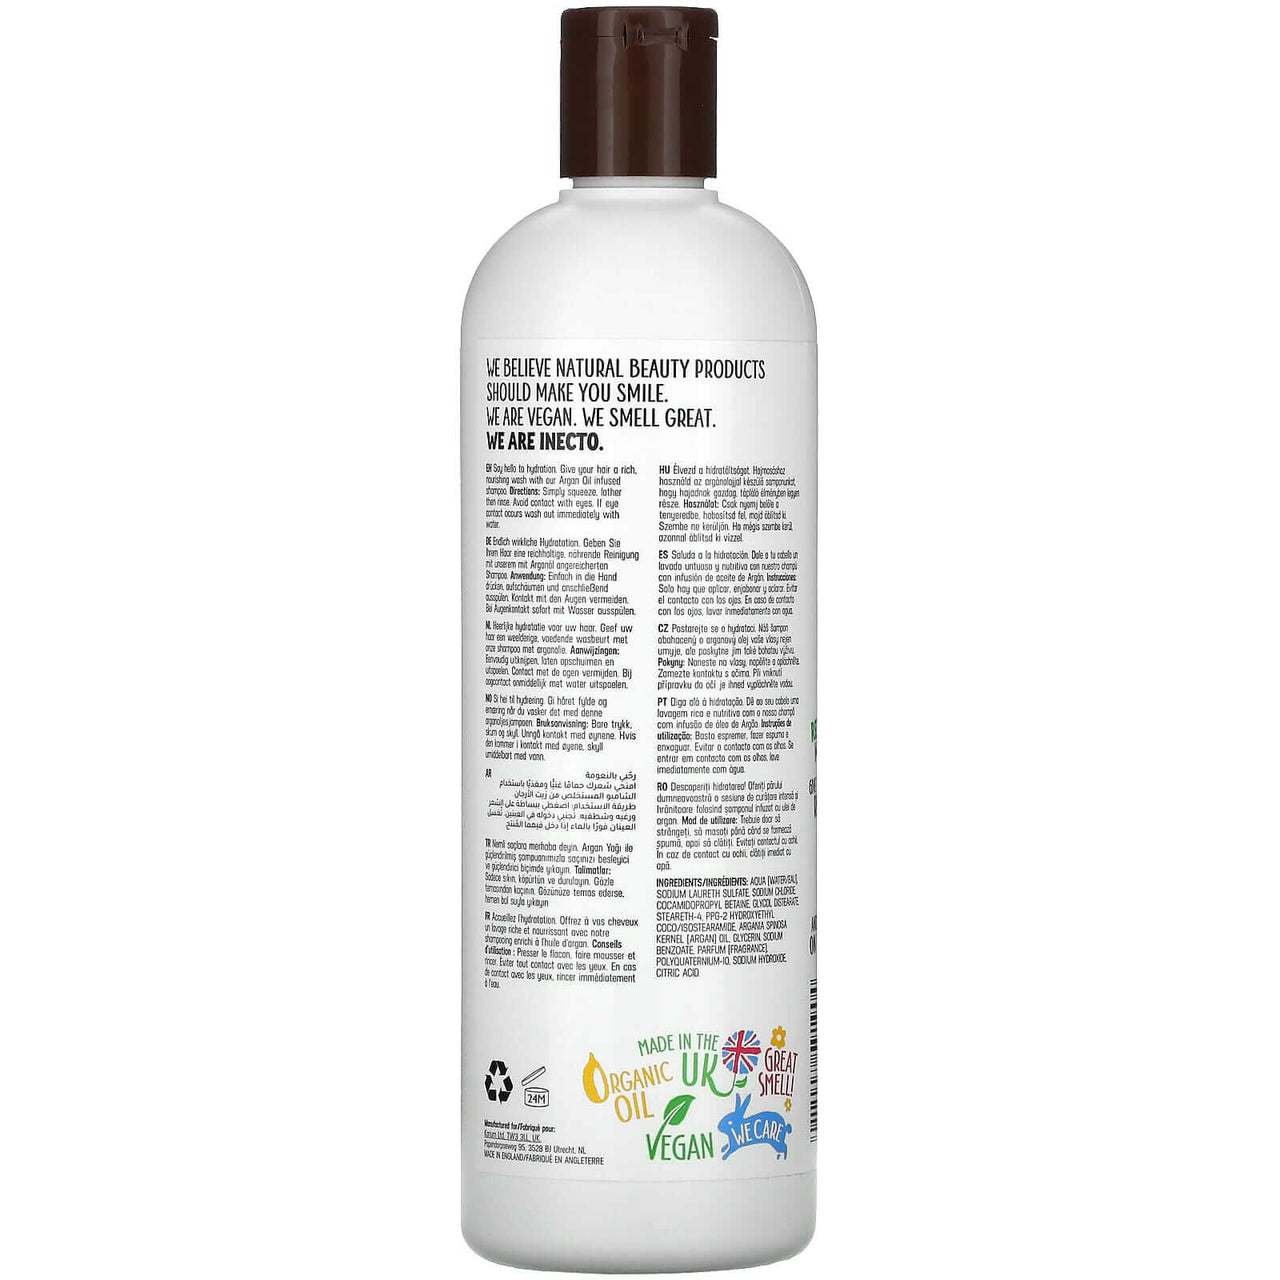 Inecto, Super Shine Argan, Shampoo 500mL - Nutrition Plus